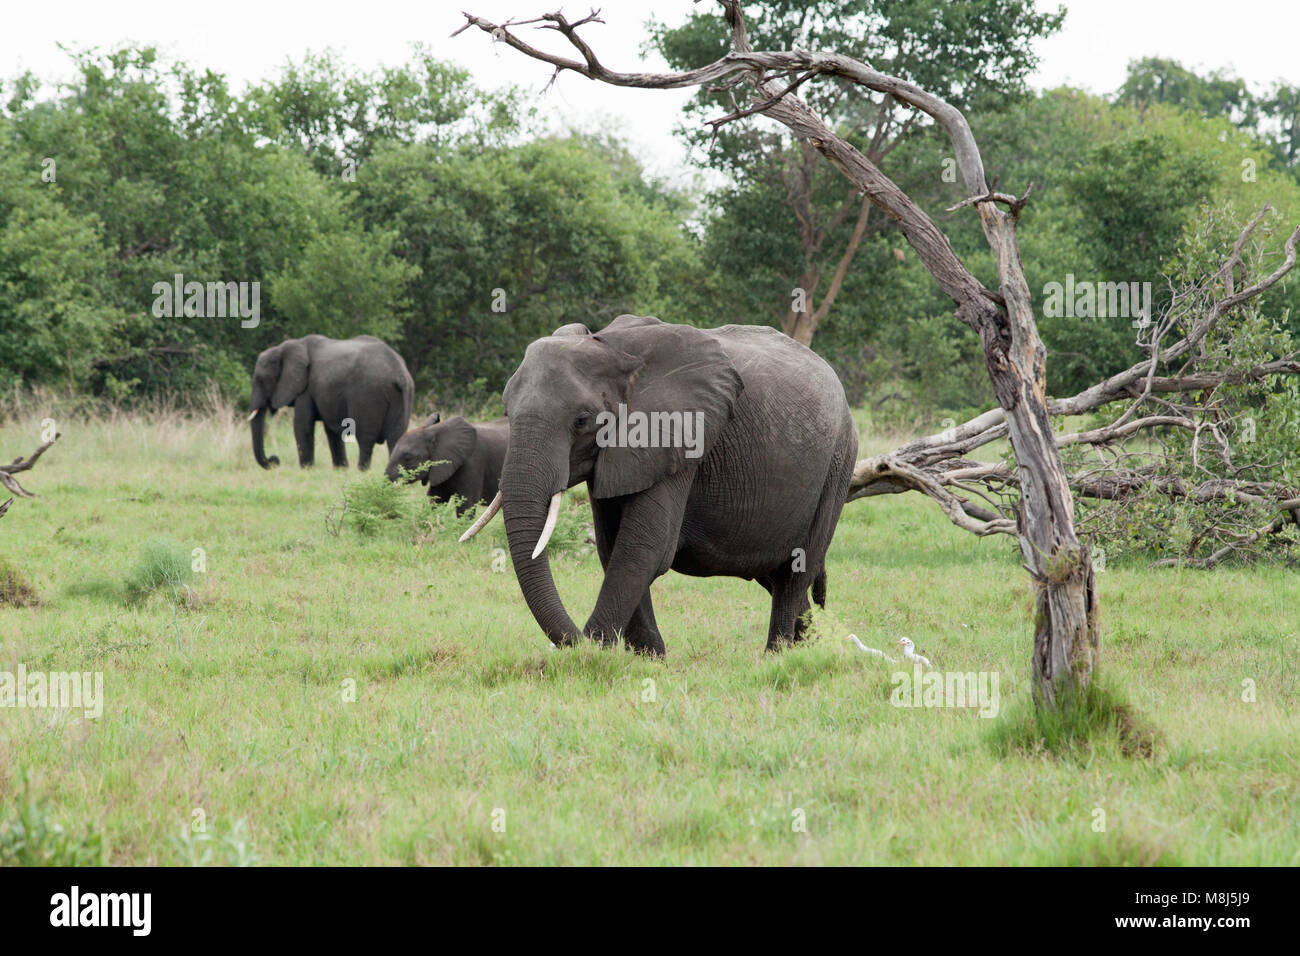 African Elephants (Loxodonta africanus). Feeding. Grazing, gathering grass. Tree damage. January. Okavango Delta. Botswana. Africa. Stock Photo